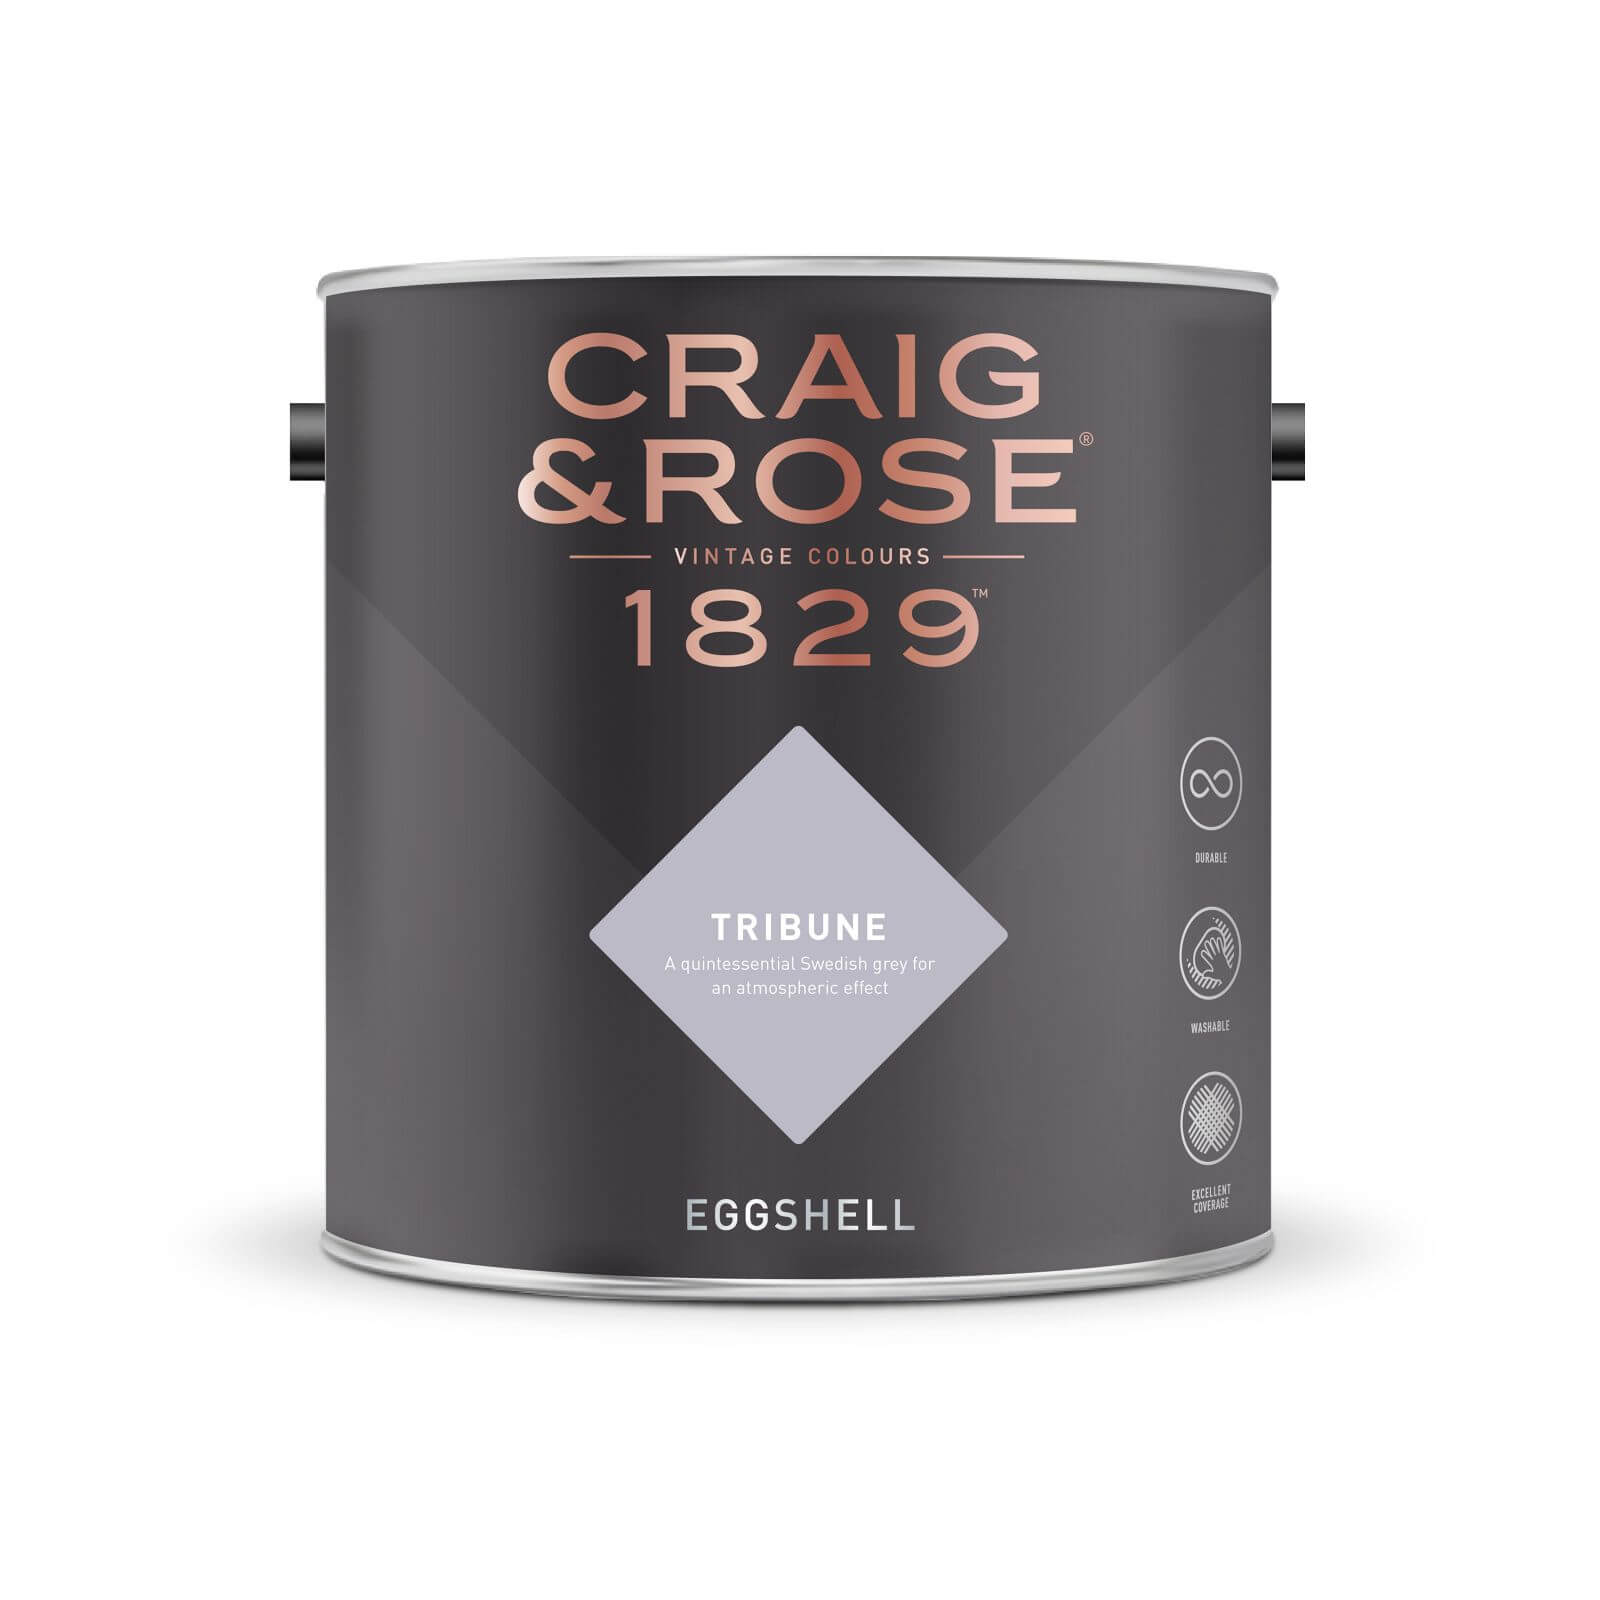 Craig & Rose 1829 Eggshell Paint Tribune - 2.5L